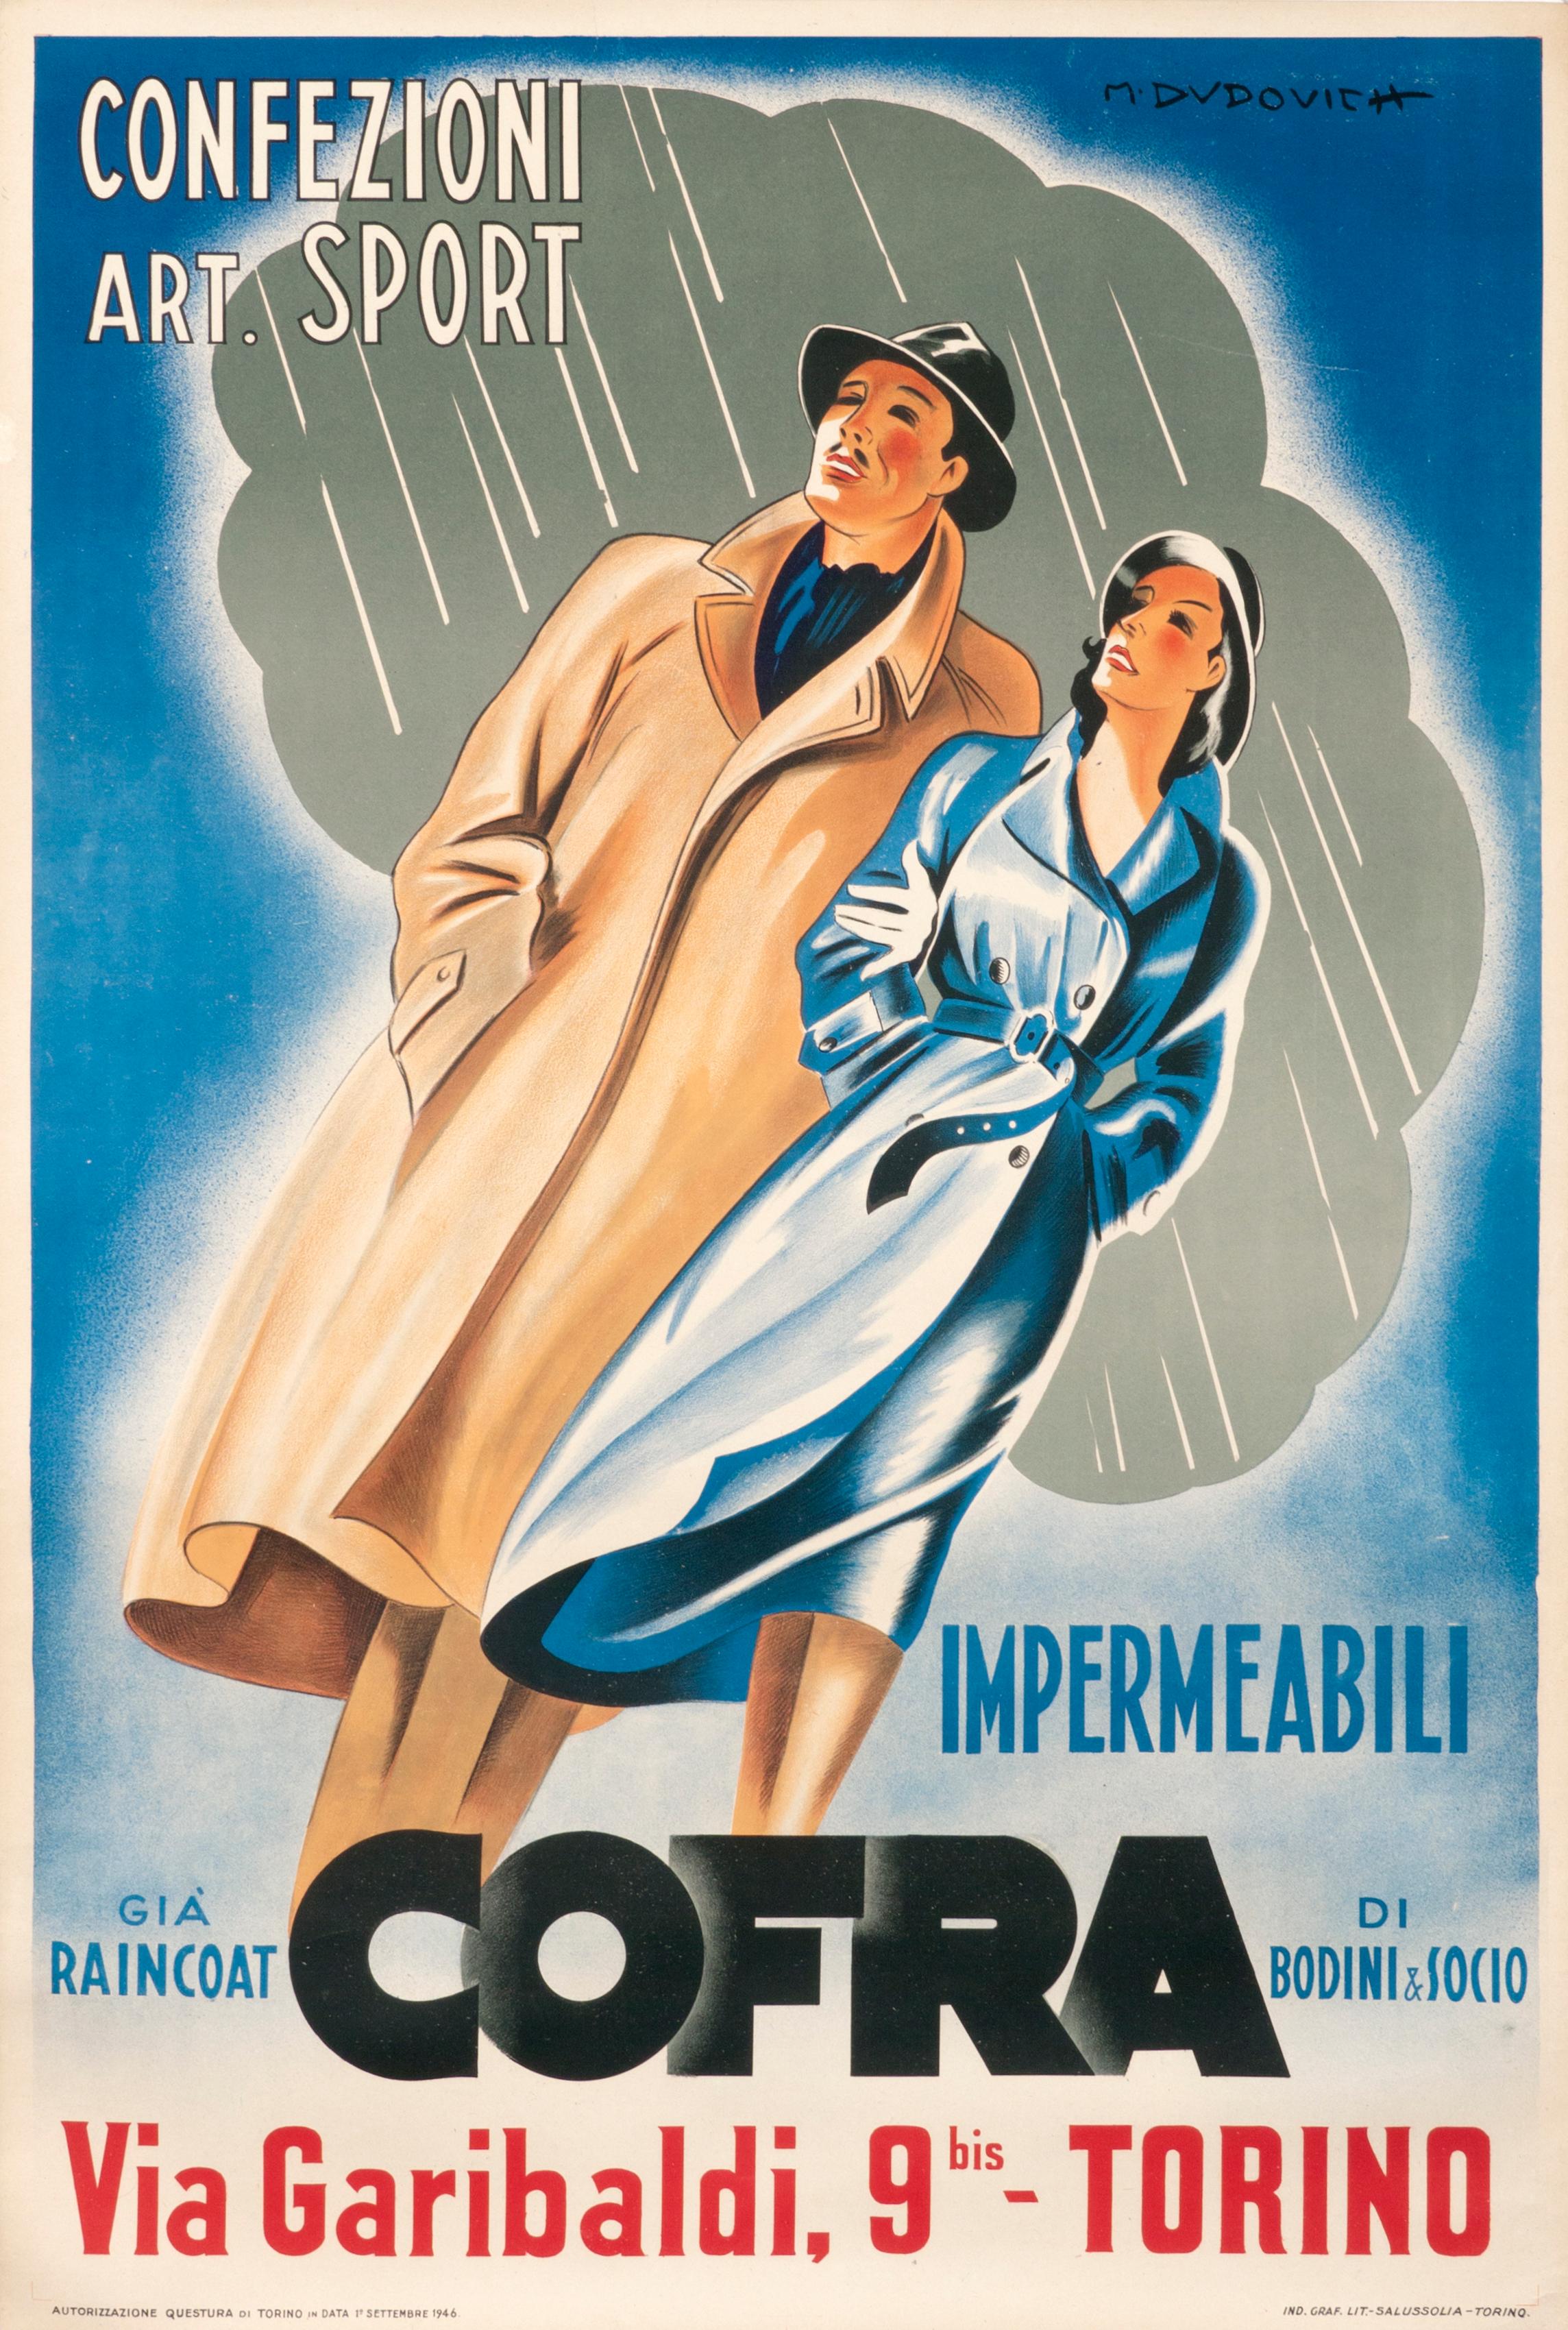 "Impermeabili Cofra" Original Dudovich Vintage Clothing Coat Poster 